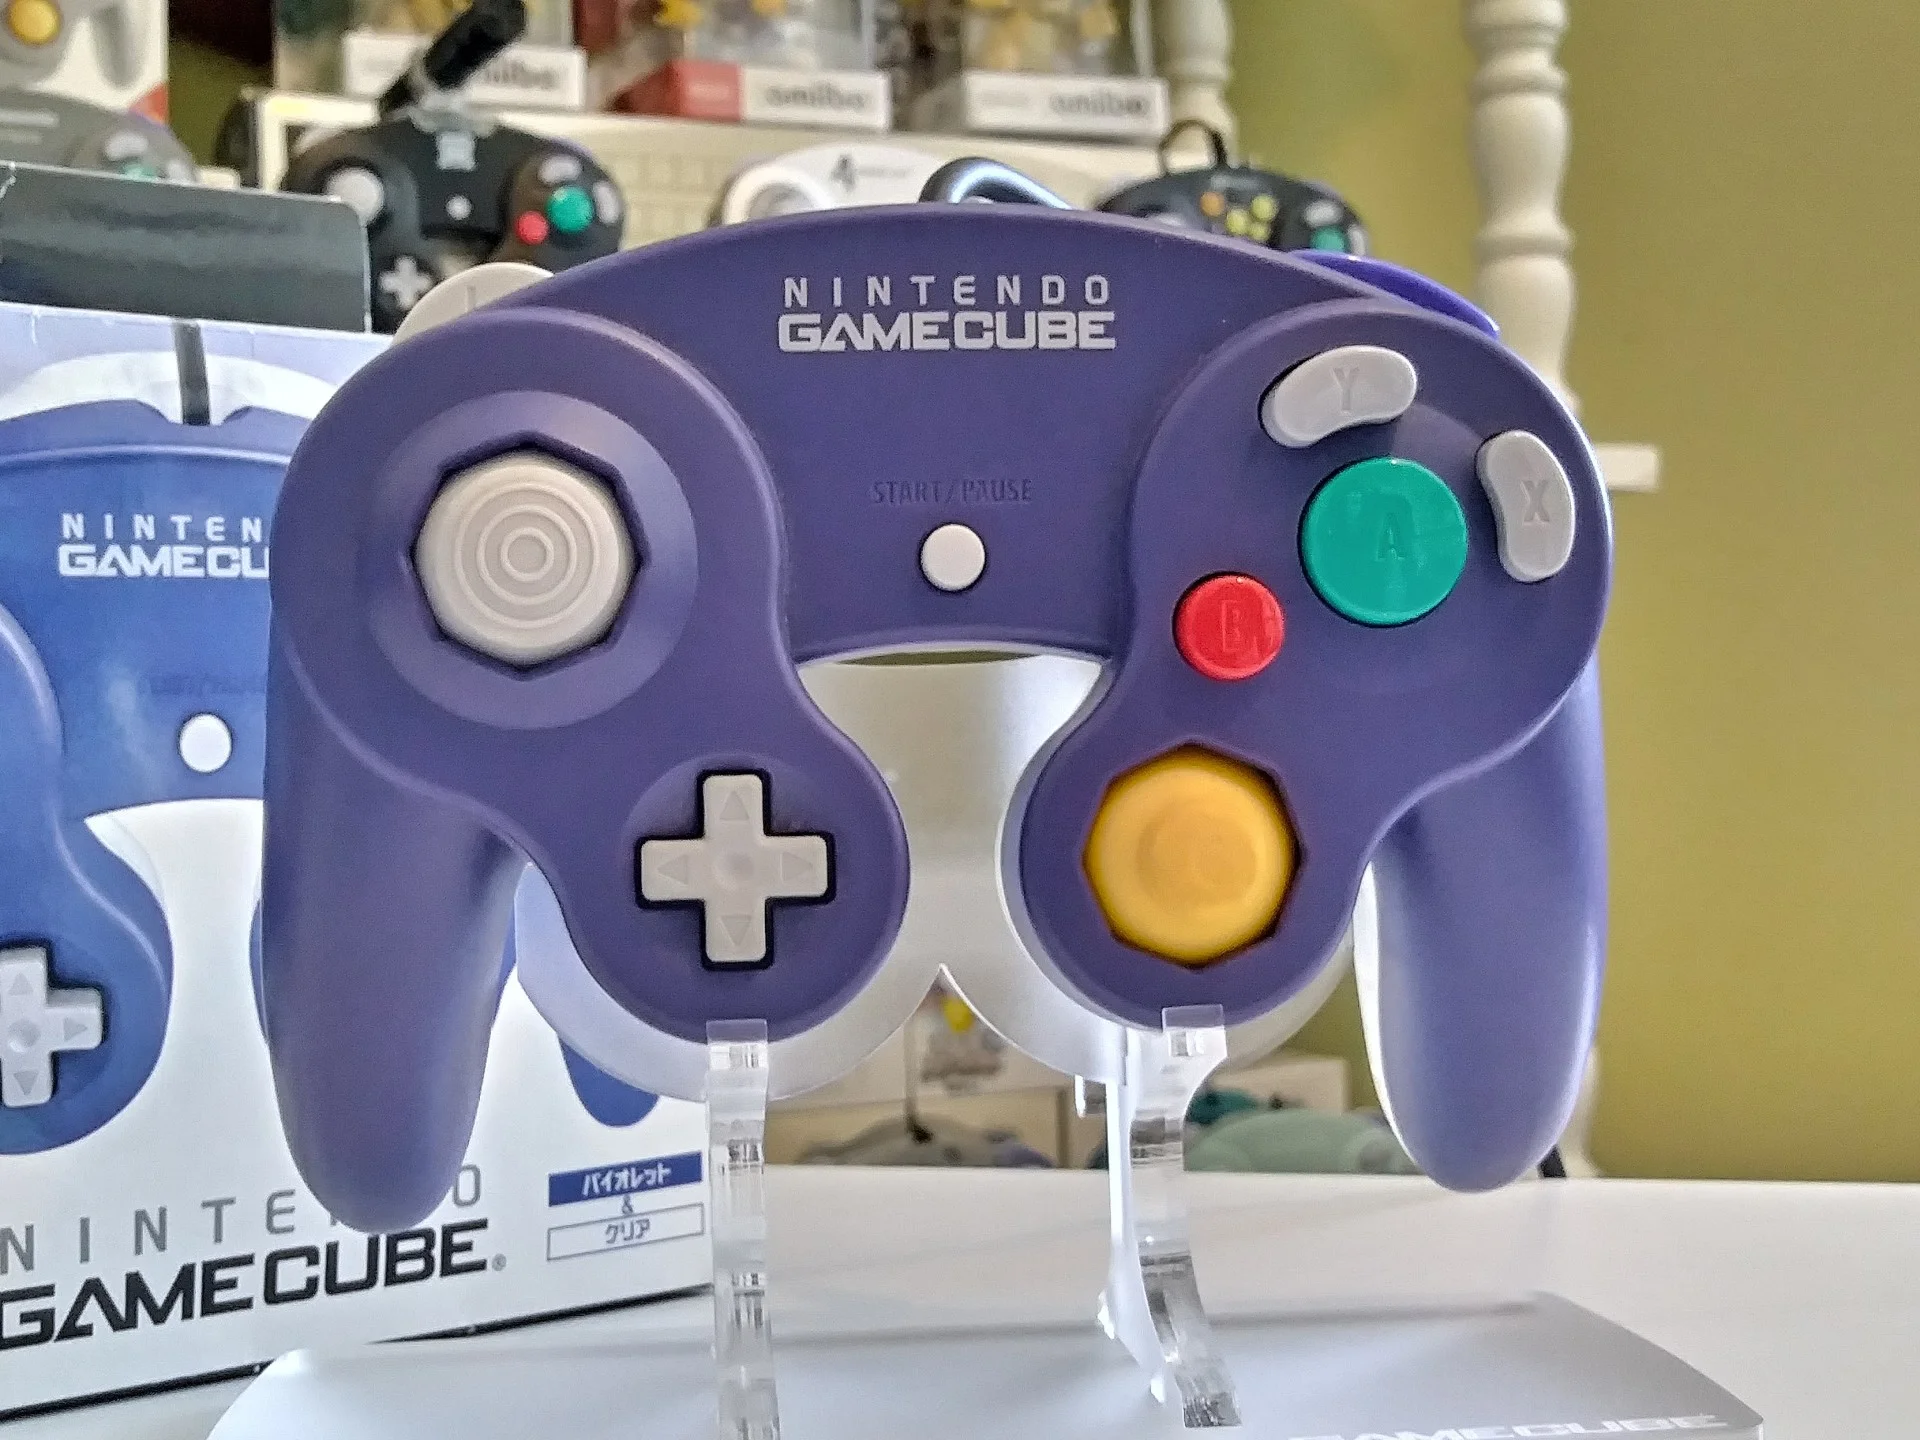  Nintendo GameCube Indigo / Clear Controller [AUS]